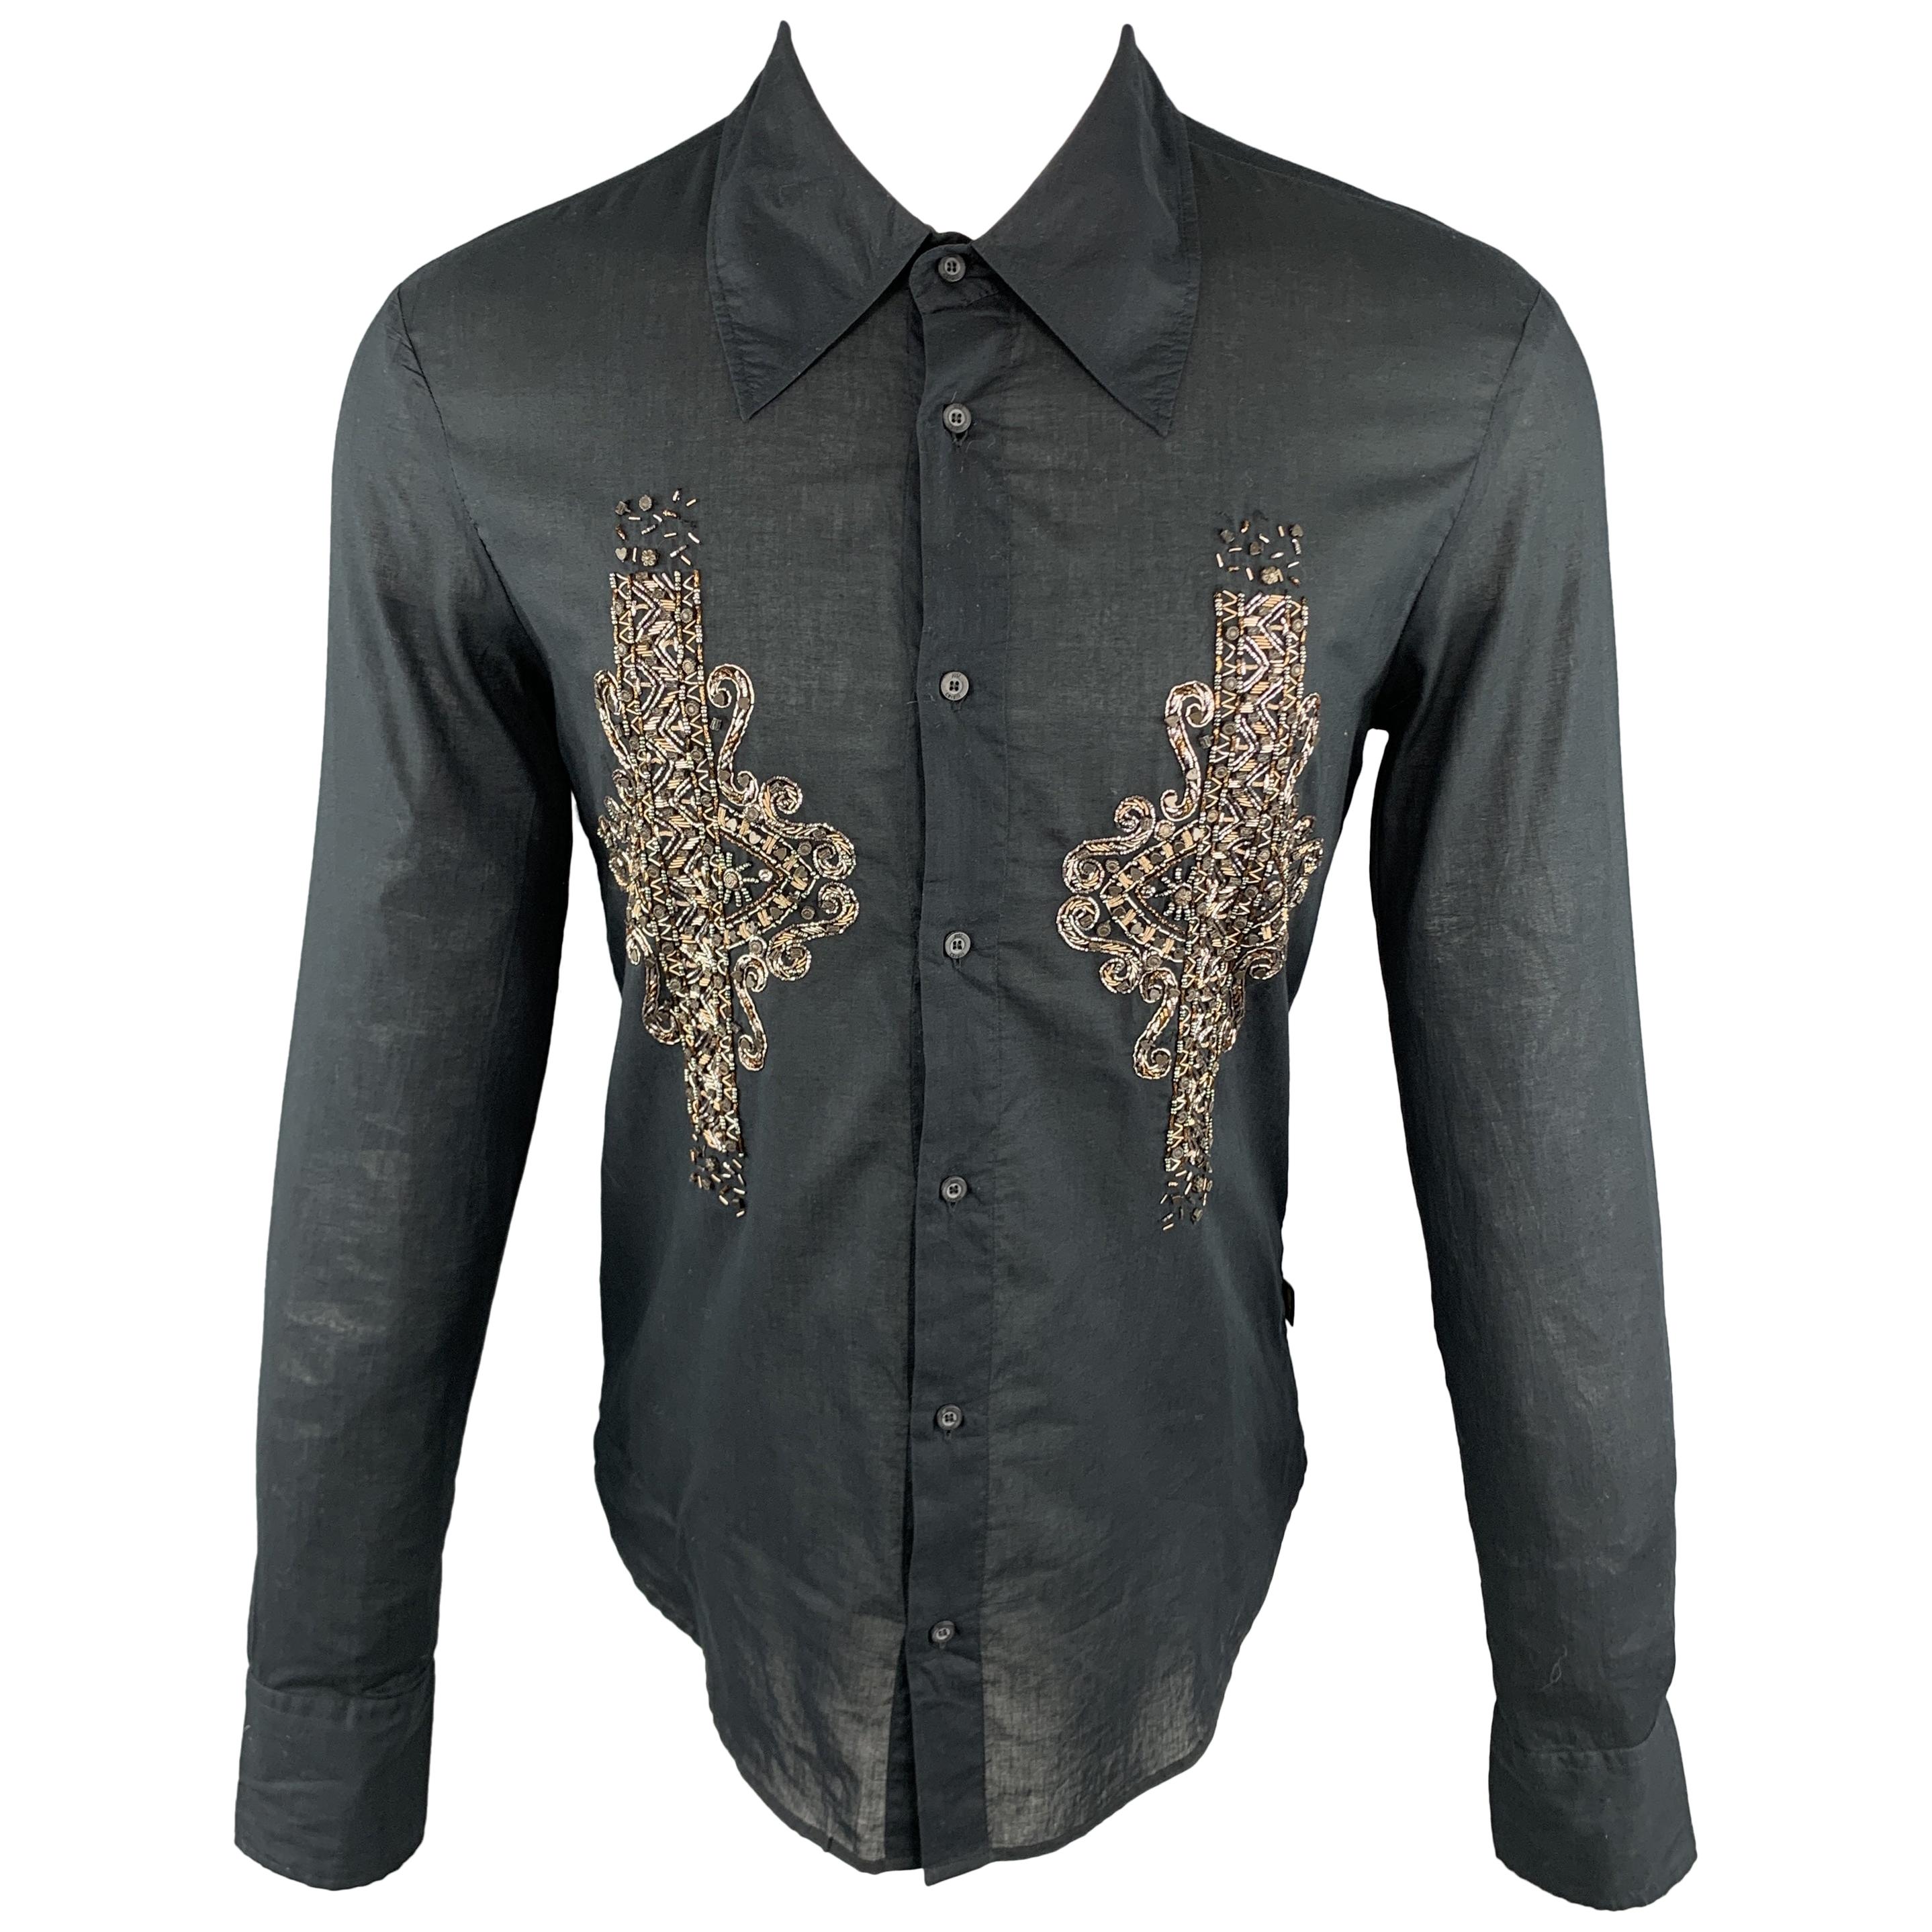 JUST CAVALLI Size M Embellishment Black Cotton Button Up Long Sleeve Shirt